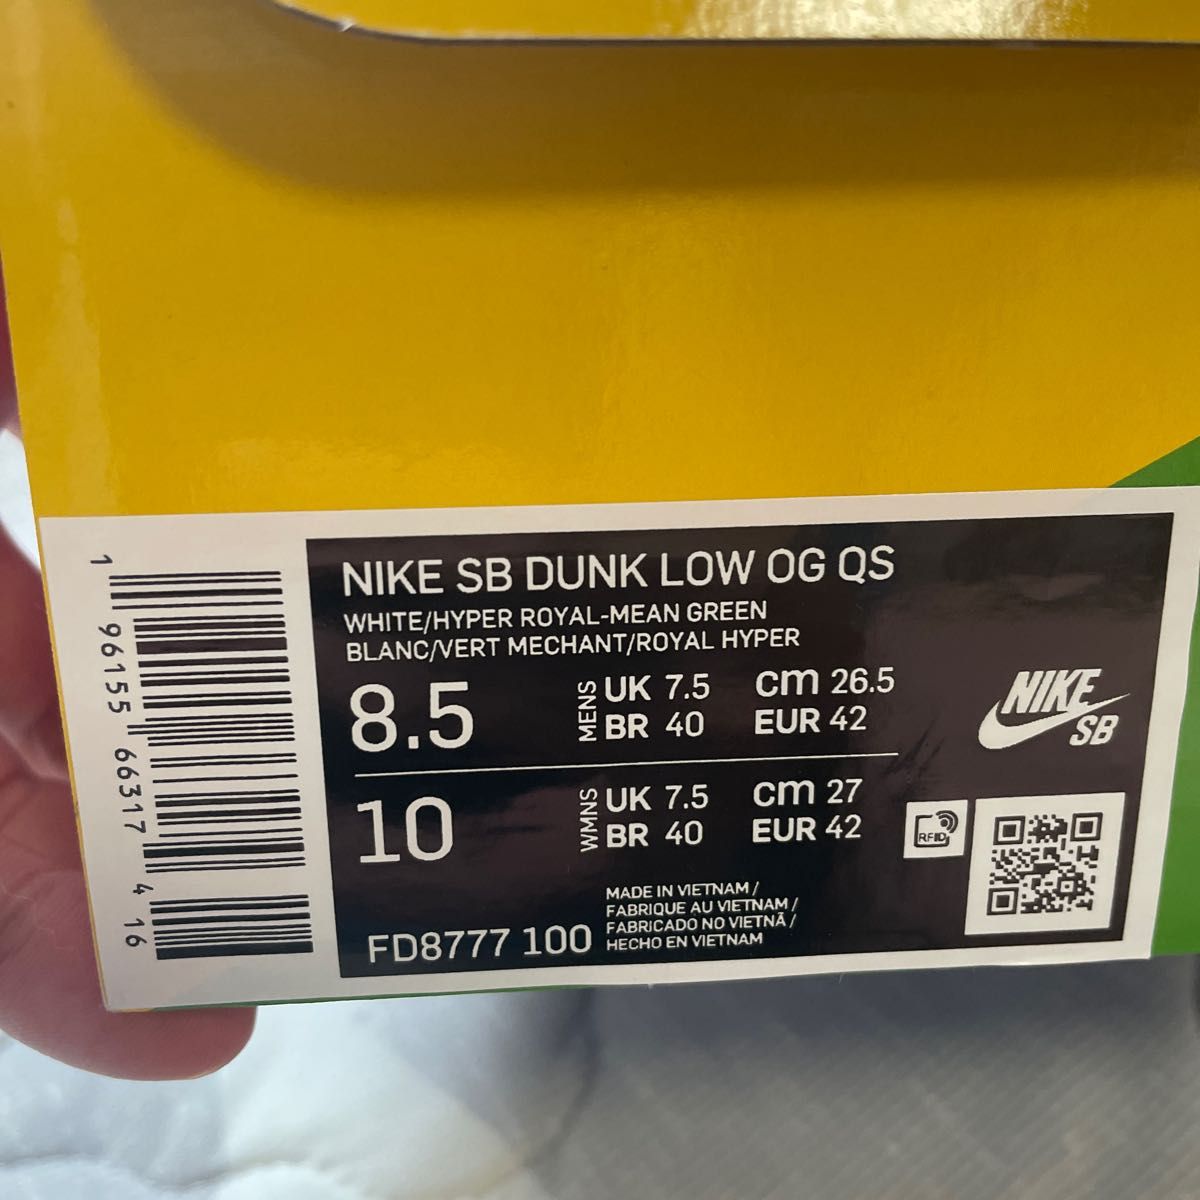 Nike SB Dunk Low "Sandy" ナイキ SB ダンク ロー "サンディー" 26.5